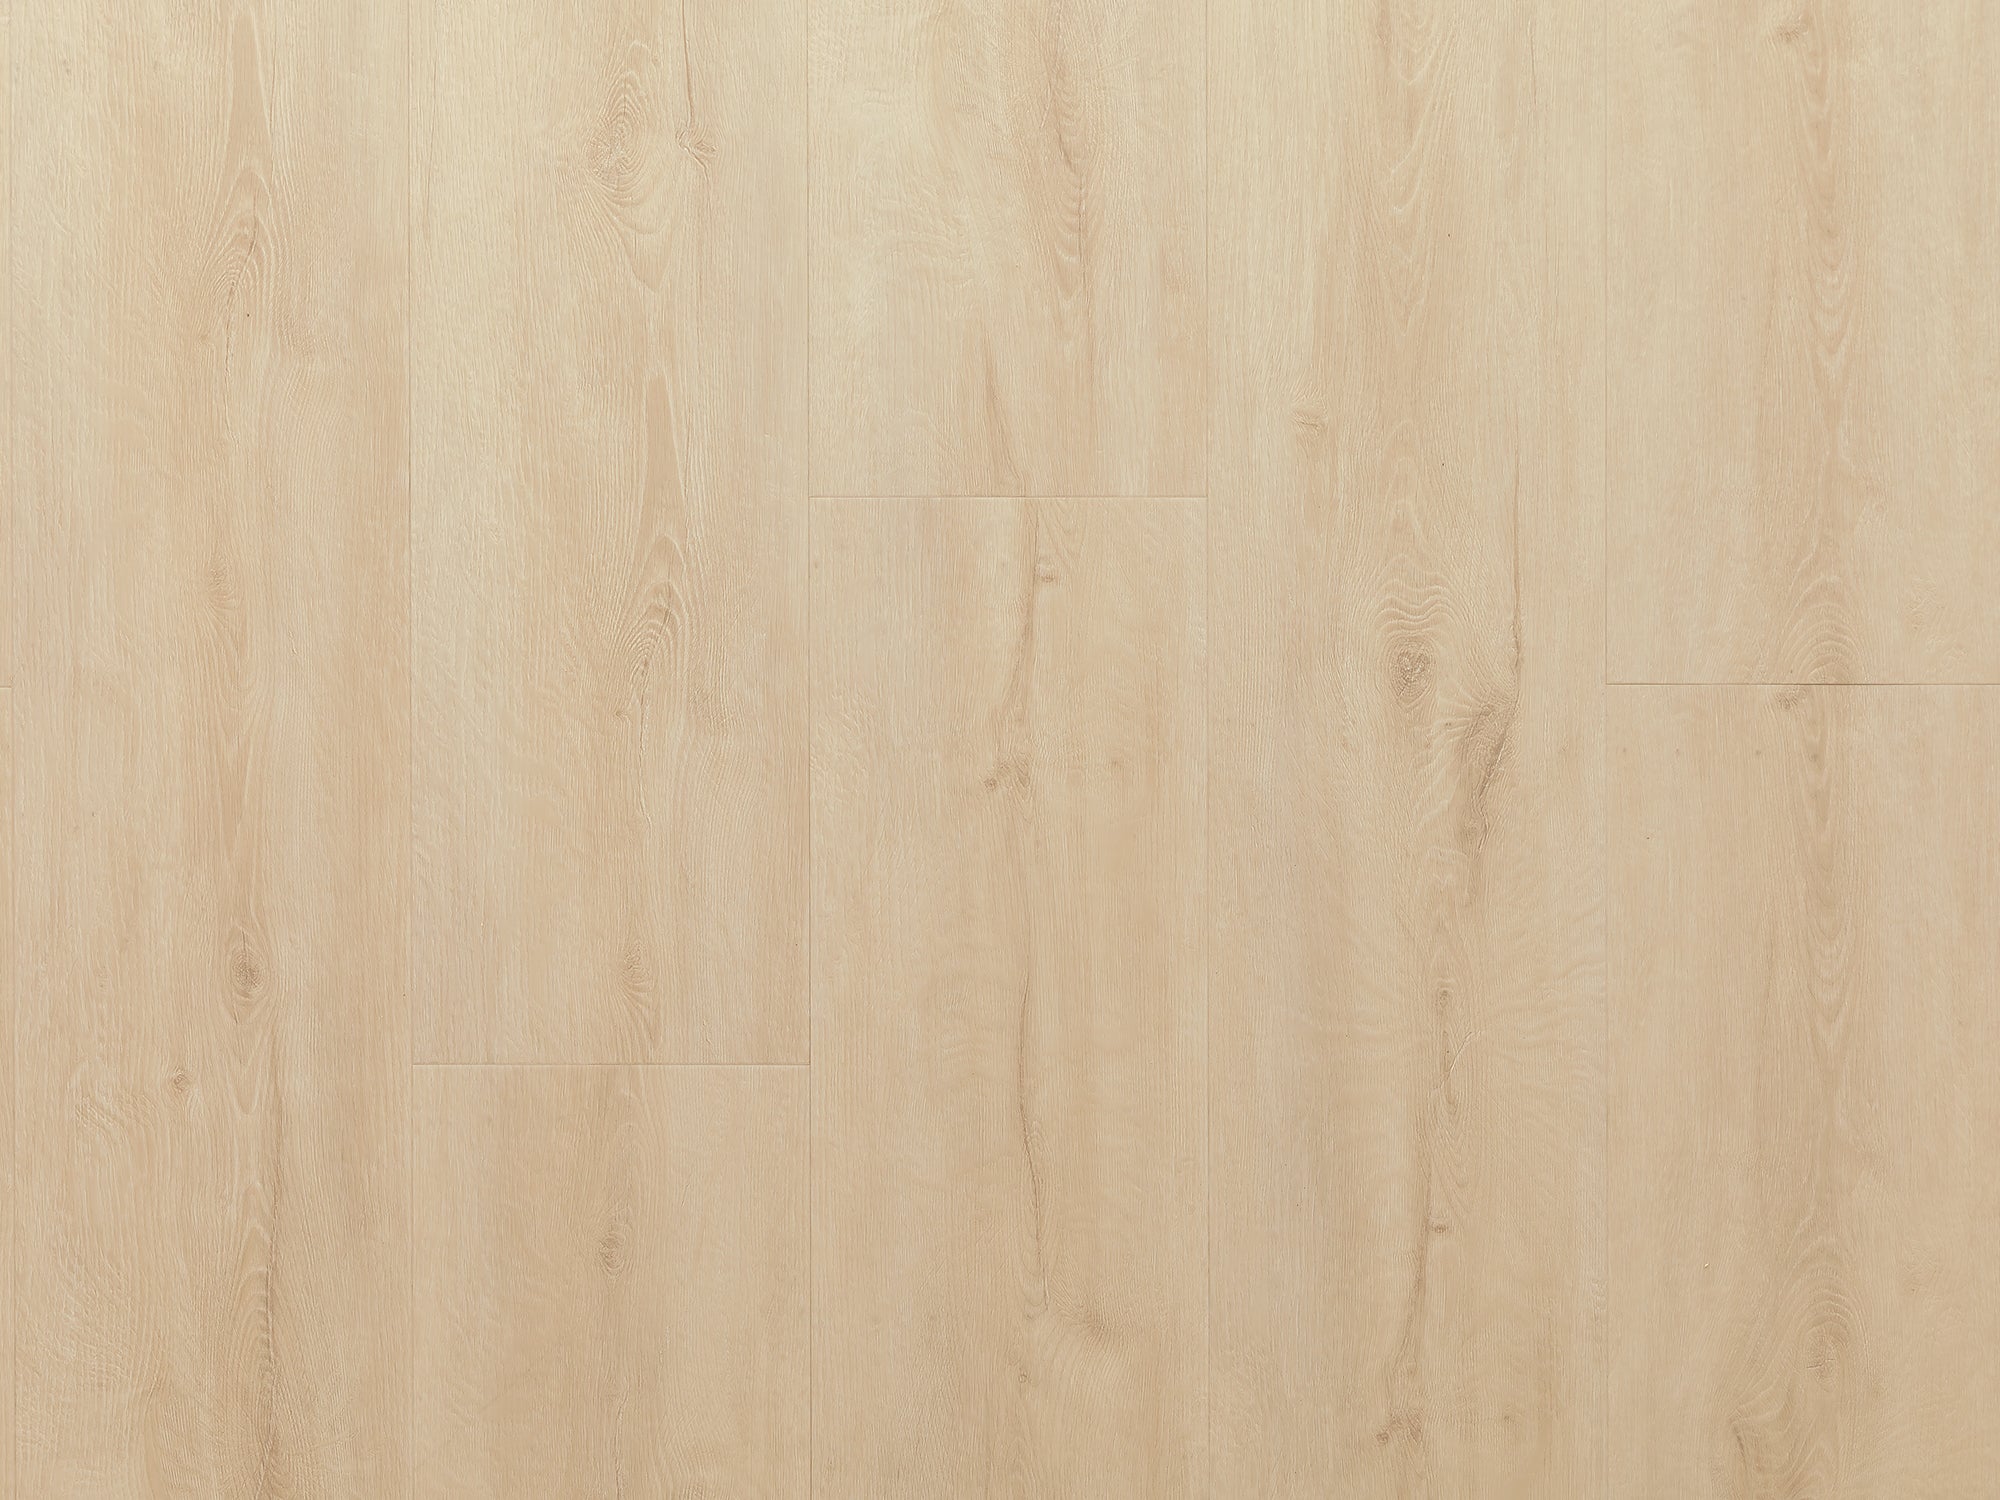 Stone Composite LVP Flooring - White Oak